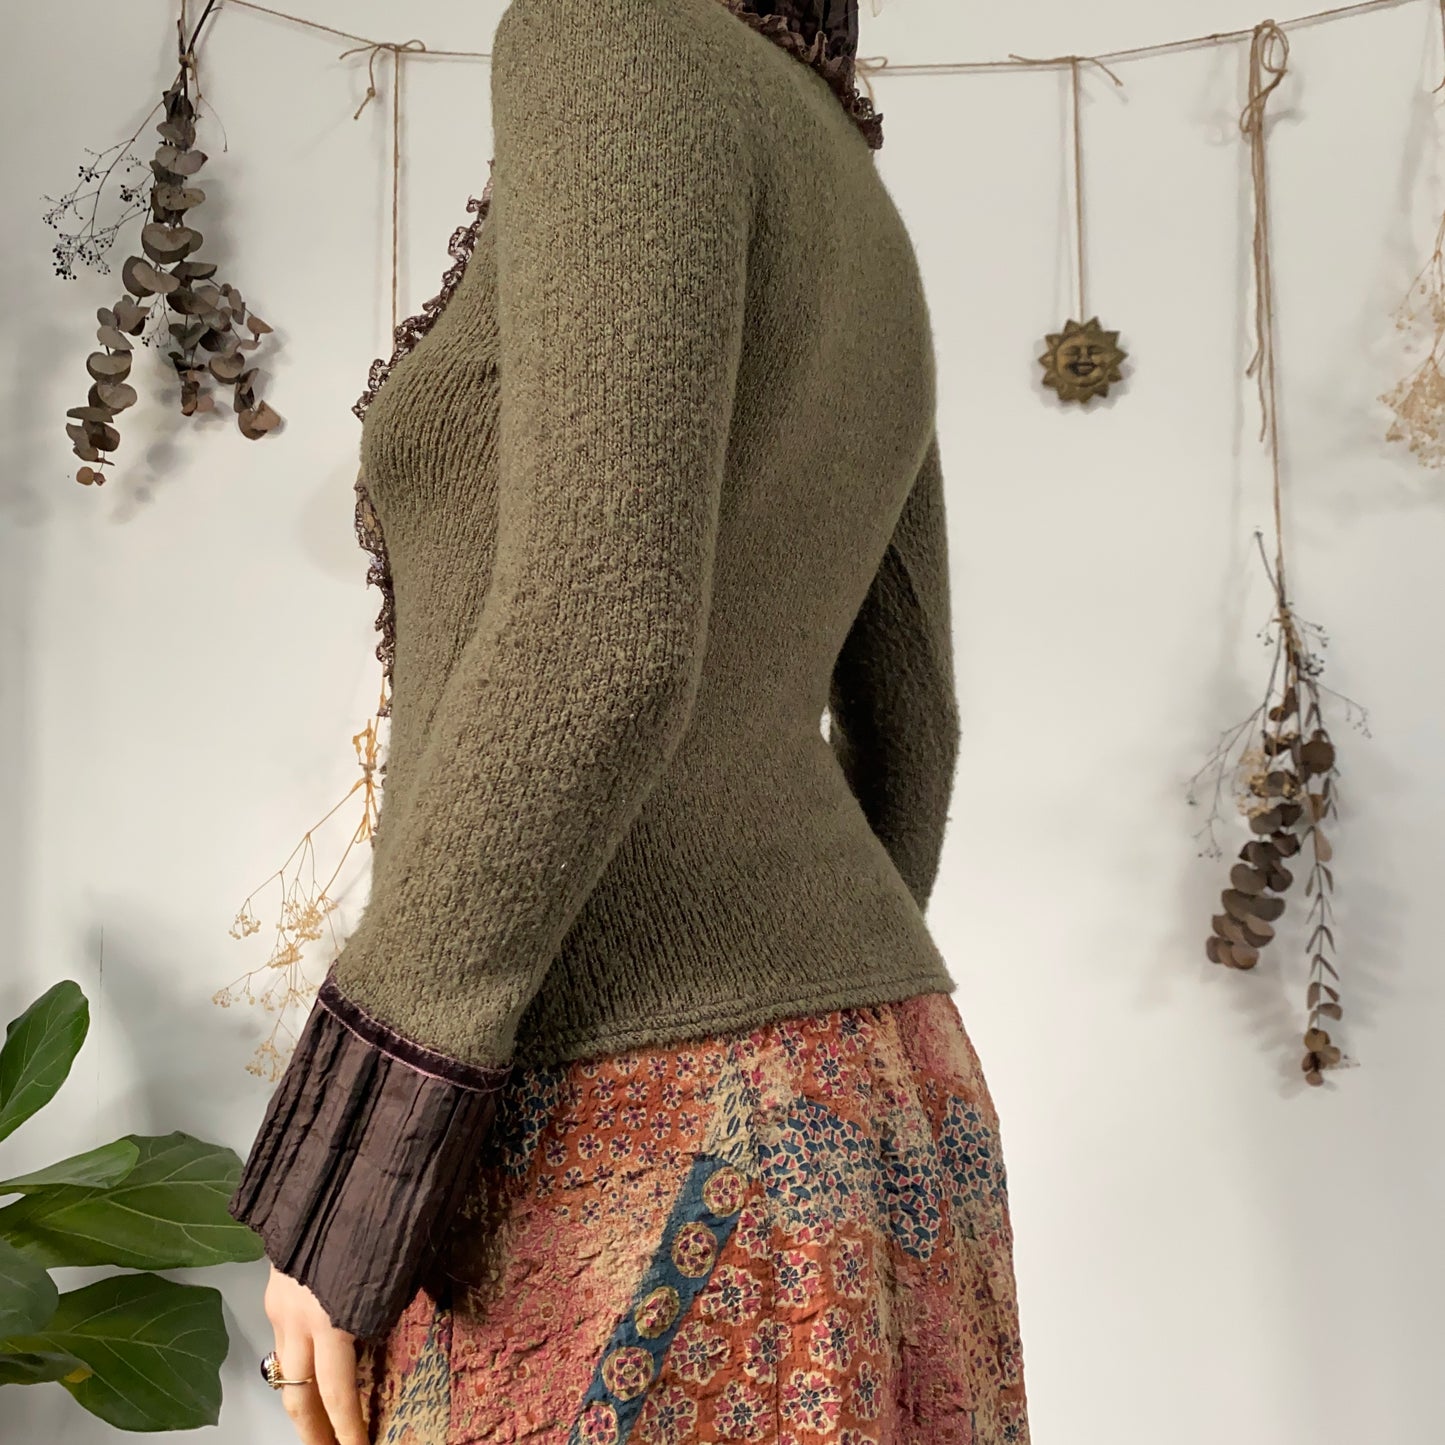 Green knit top - size M/L